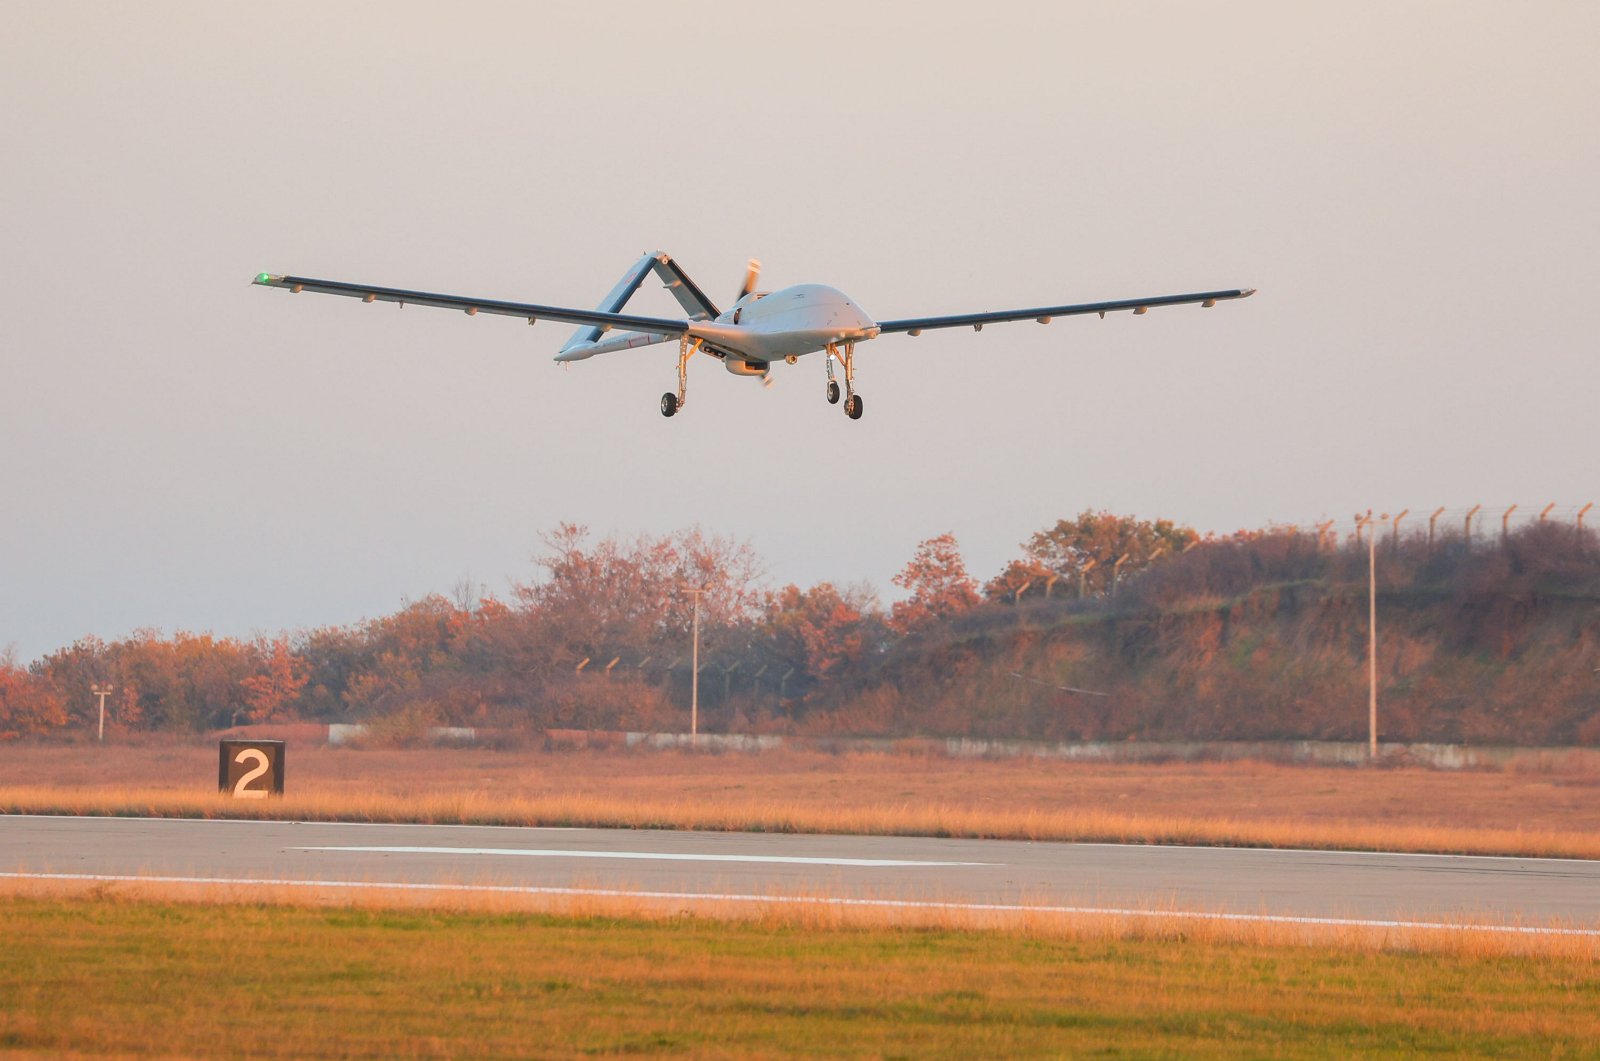 Türkiye's new combat drone completes endurance flight test | Daily Sabah - Daily Sabah